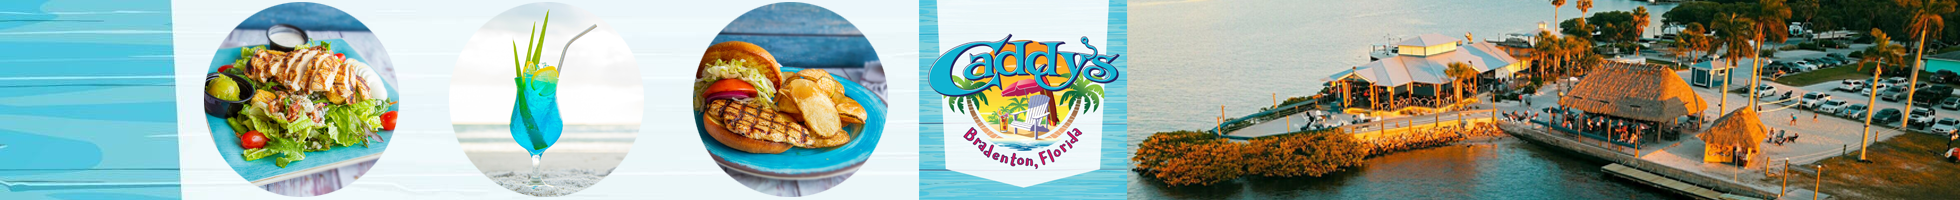 Caddy’s Bradenton